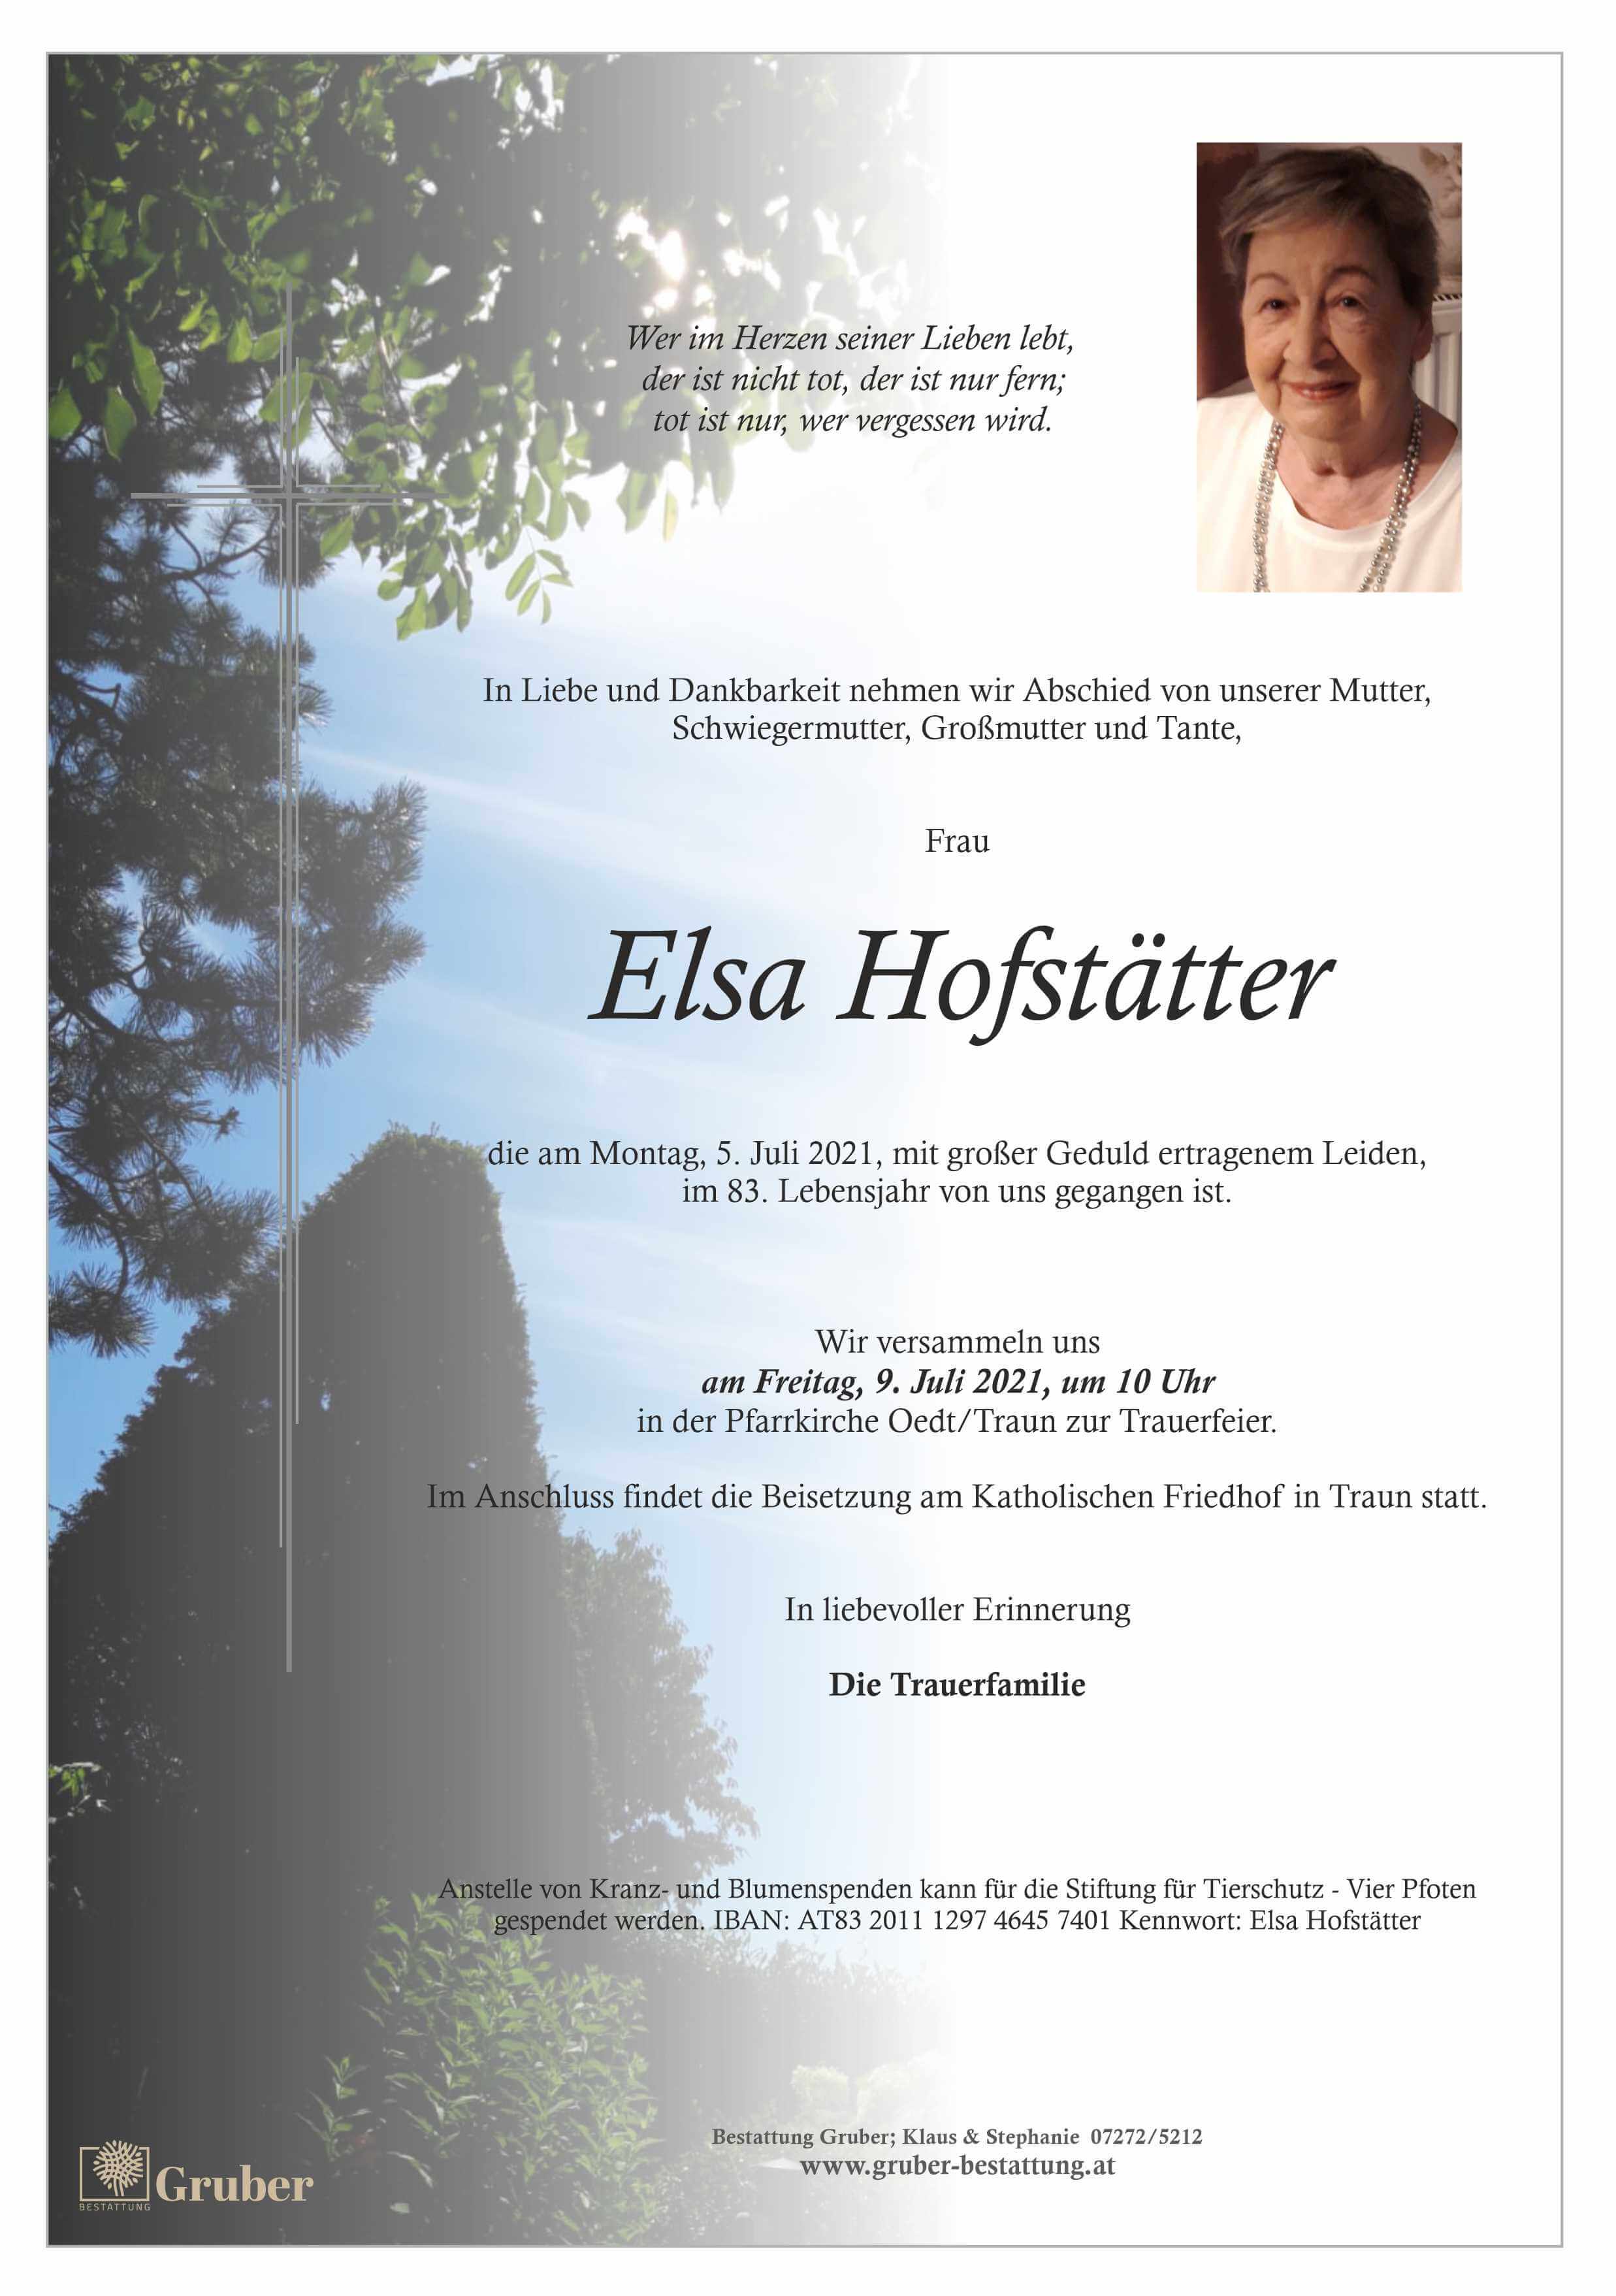 Elsa Hofstätter (Traun)